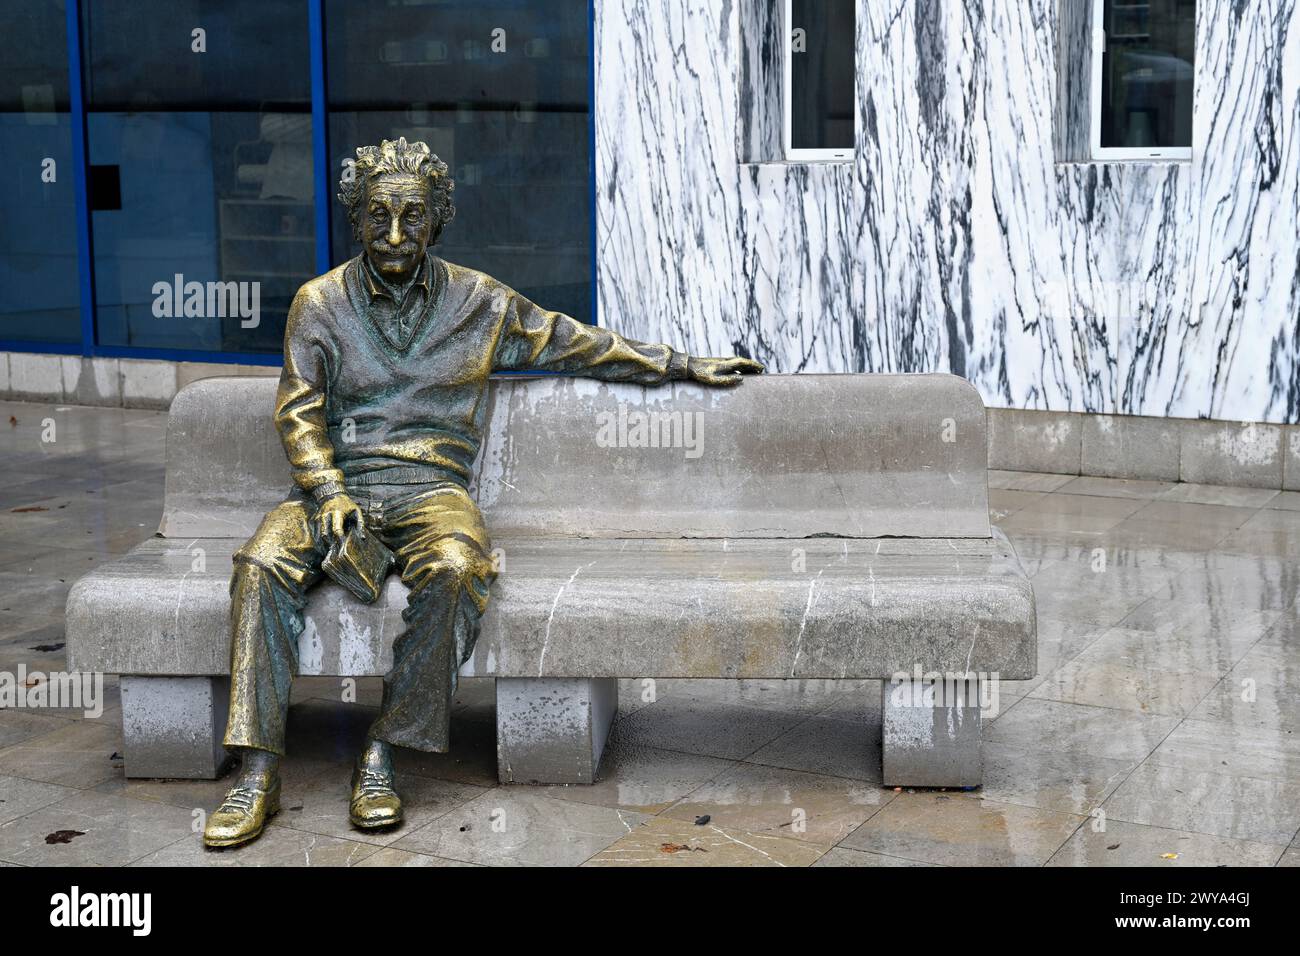 Statua di Albert Einstein seduta sulla panchina all'esterno del museo della scienza in Parque de las Ciencias, Granada, Spagna Foto Stock